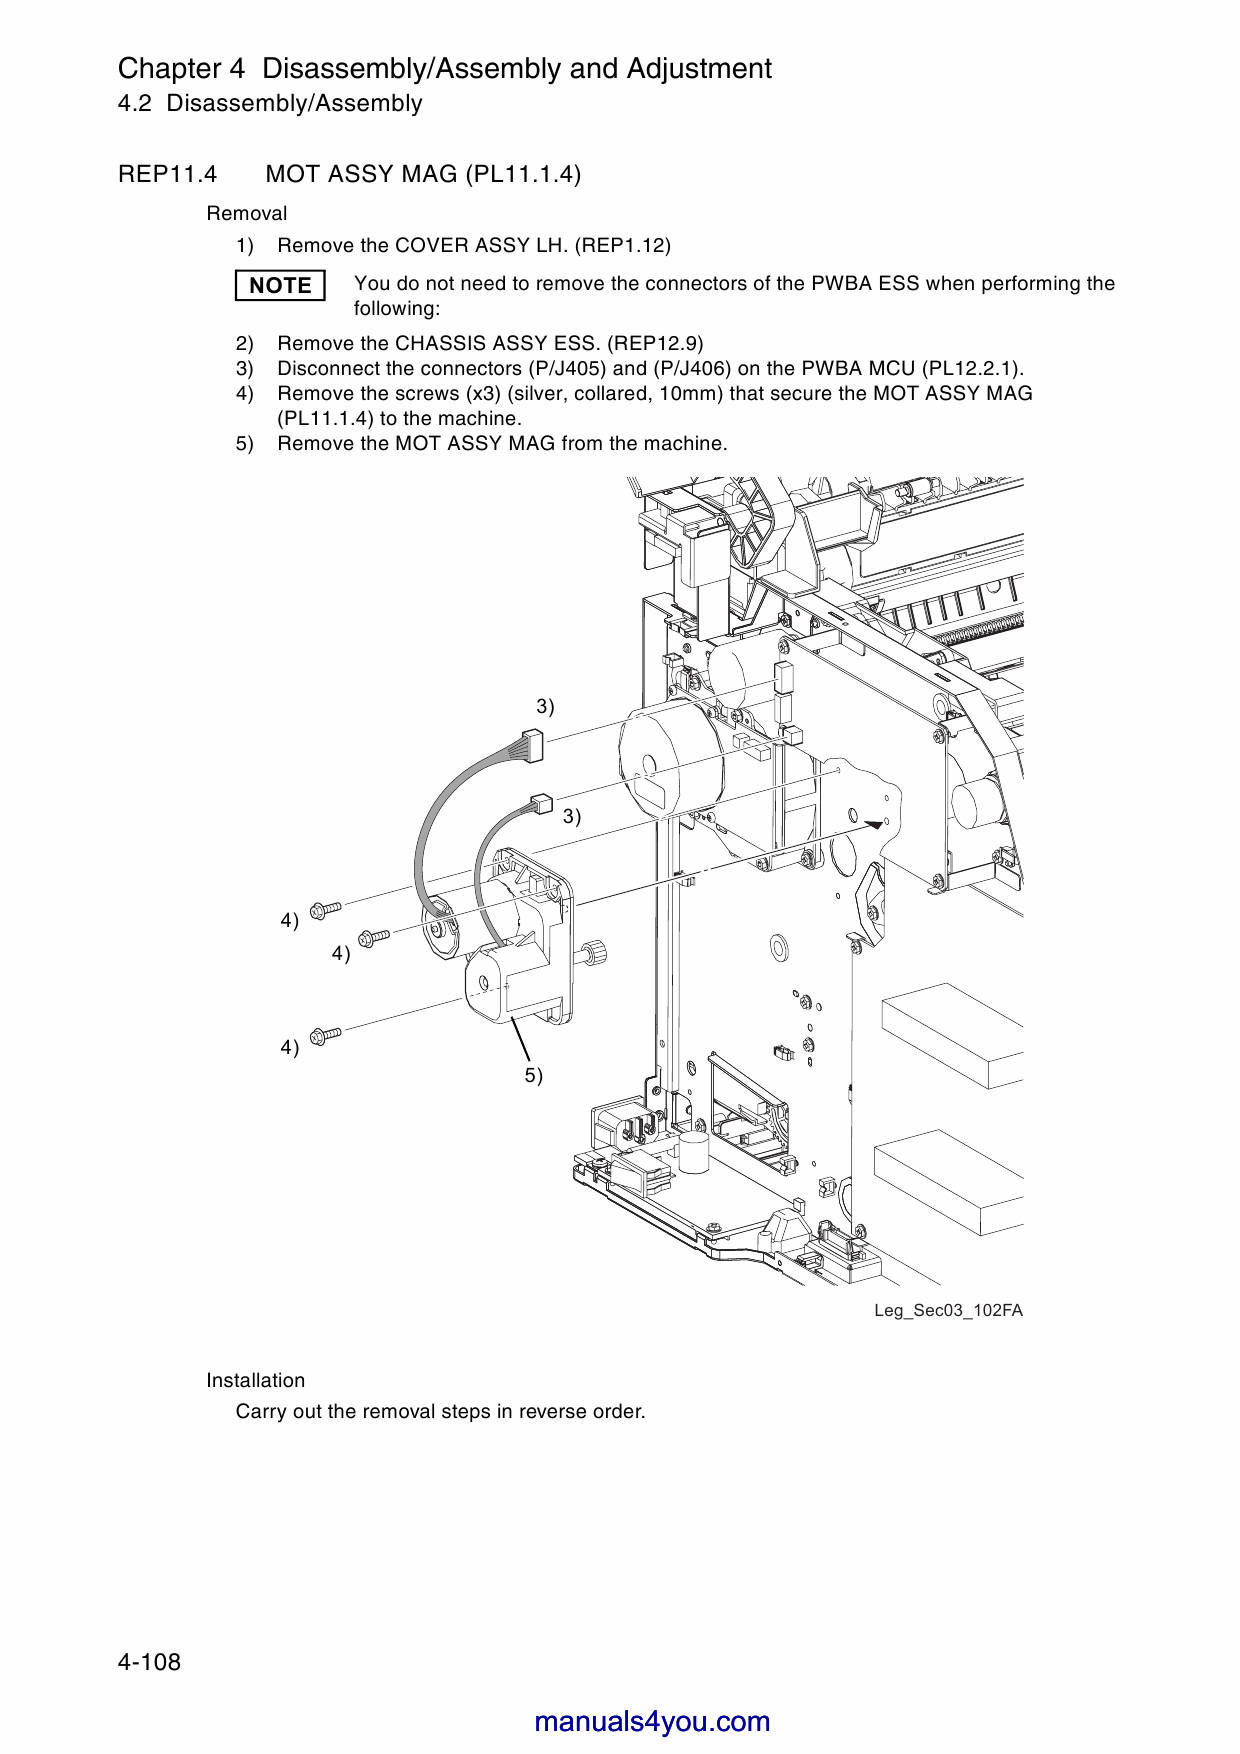 Xerox DocuPrint C525A Fuji Color-Laser-Printer Parts List and Service Manual-4